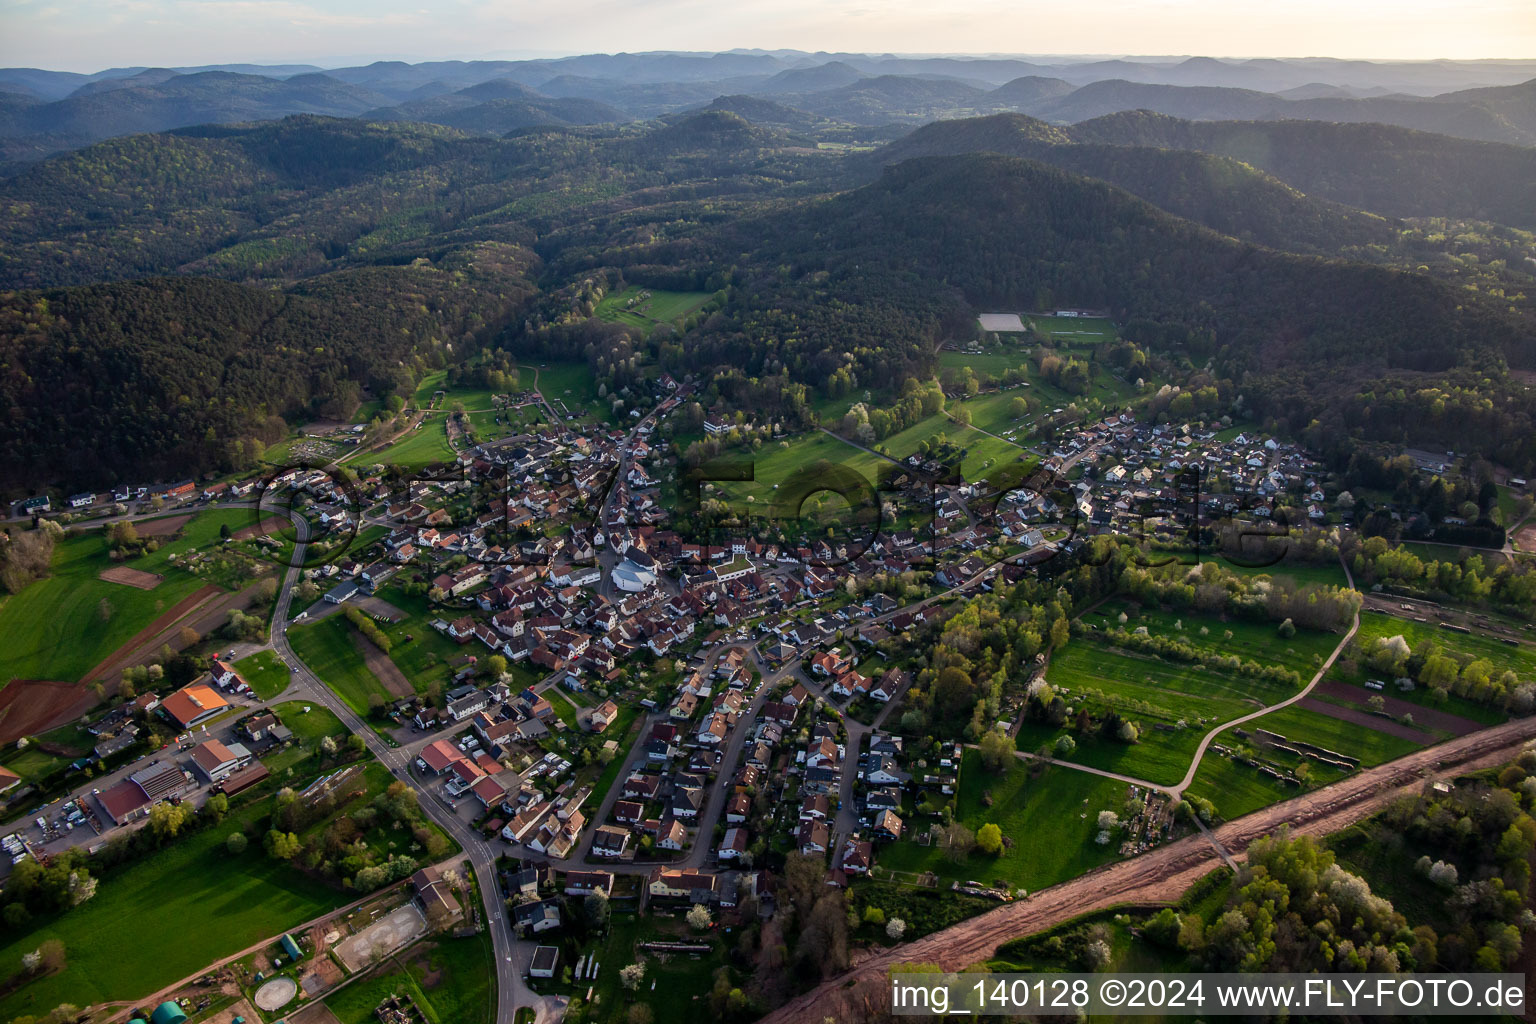 Quartier Gossersweiler in Gossersweiler-Stein dans le département Rhénanie-Palatinat, Allemagne du point de vue du drone